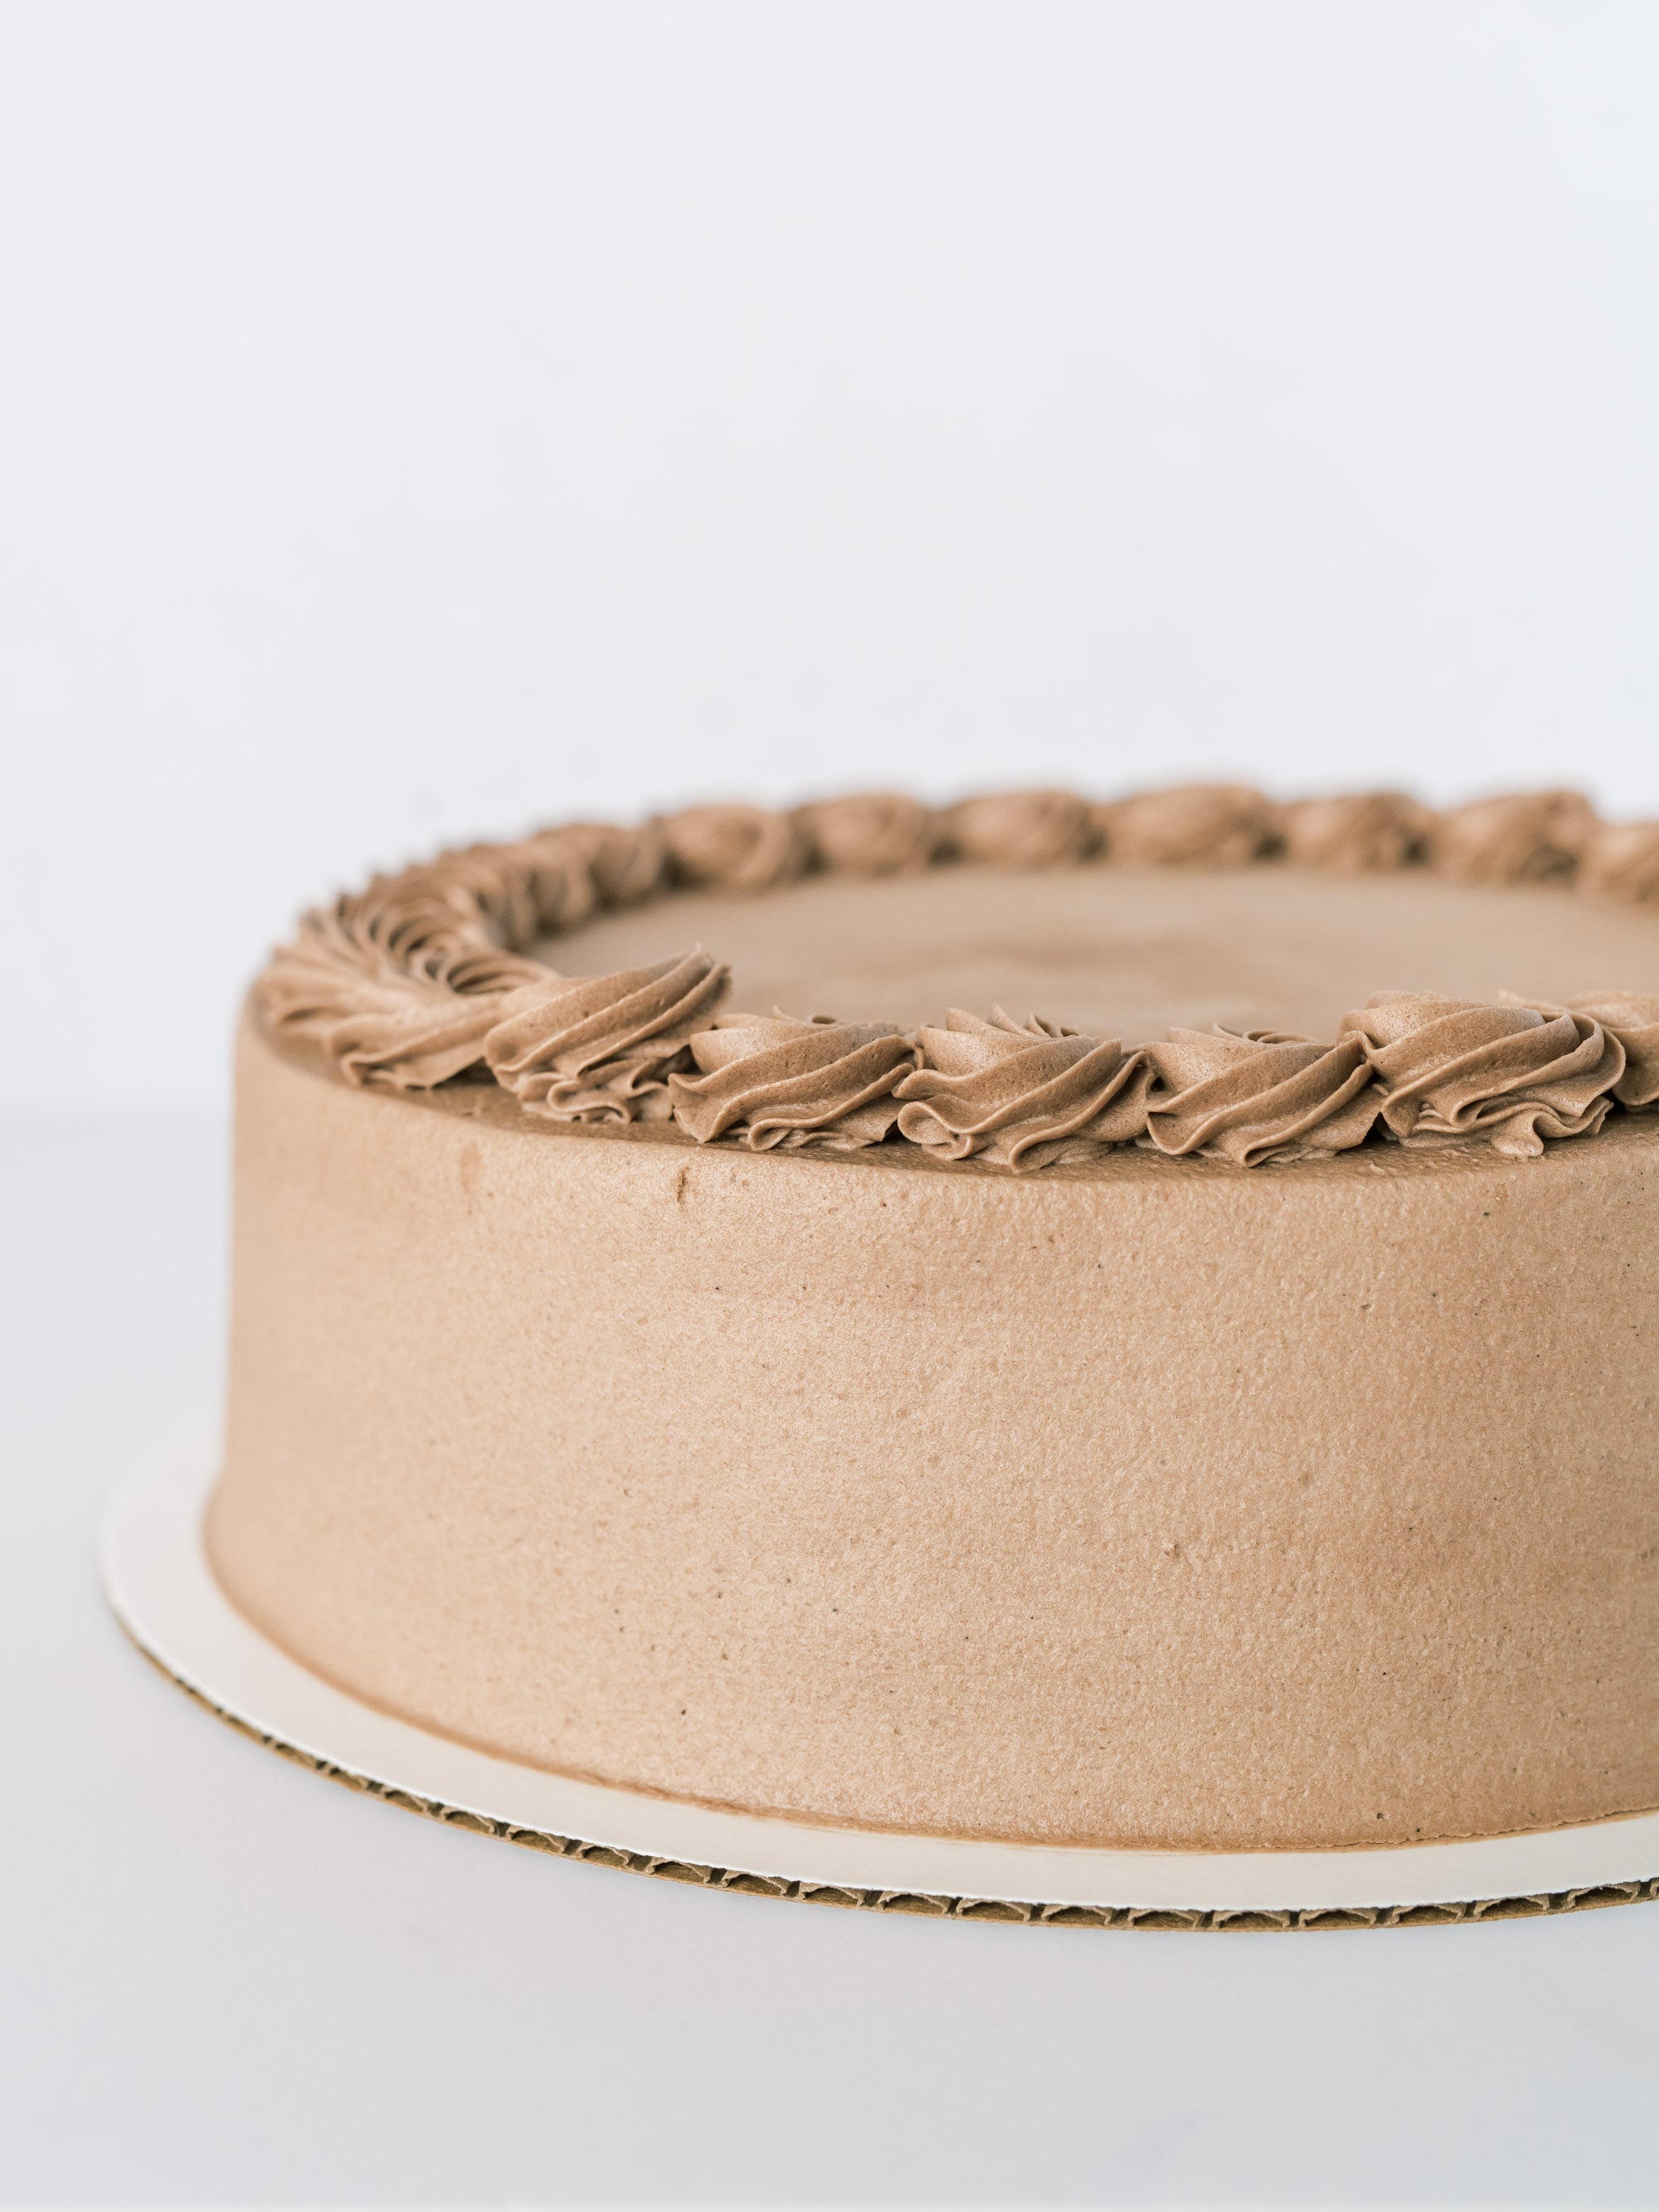 Custom Keto Cakes » DELICIOUSLY KETO DESSERTS